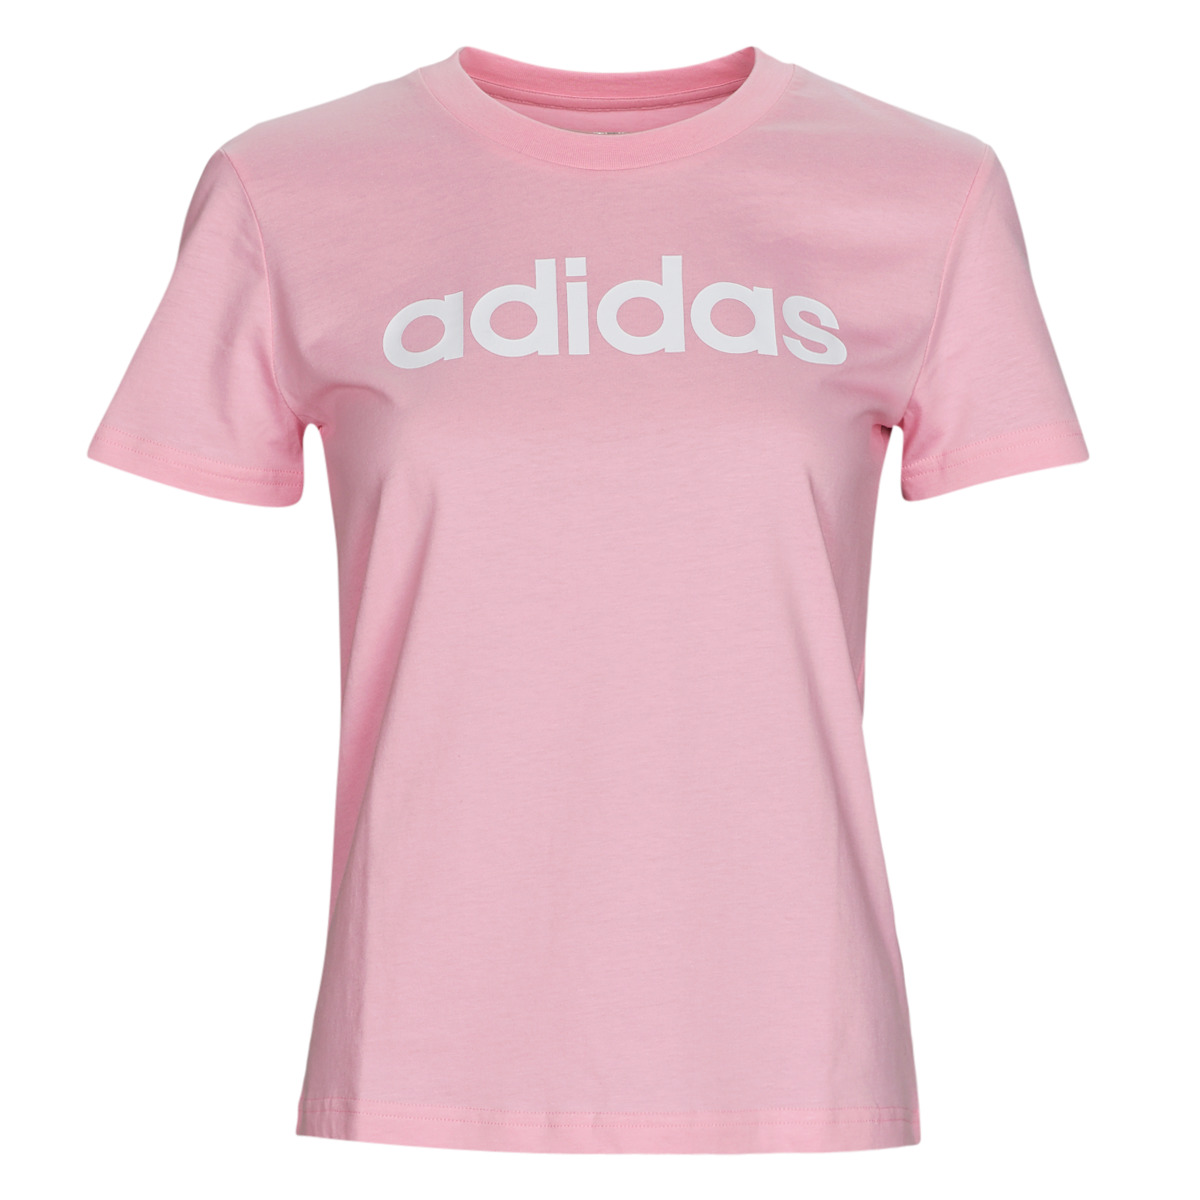 textil Dam T-shirts adidas Performance W LIN T Rosa